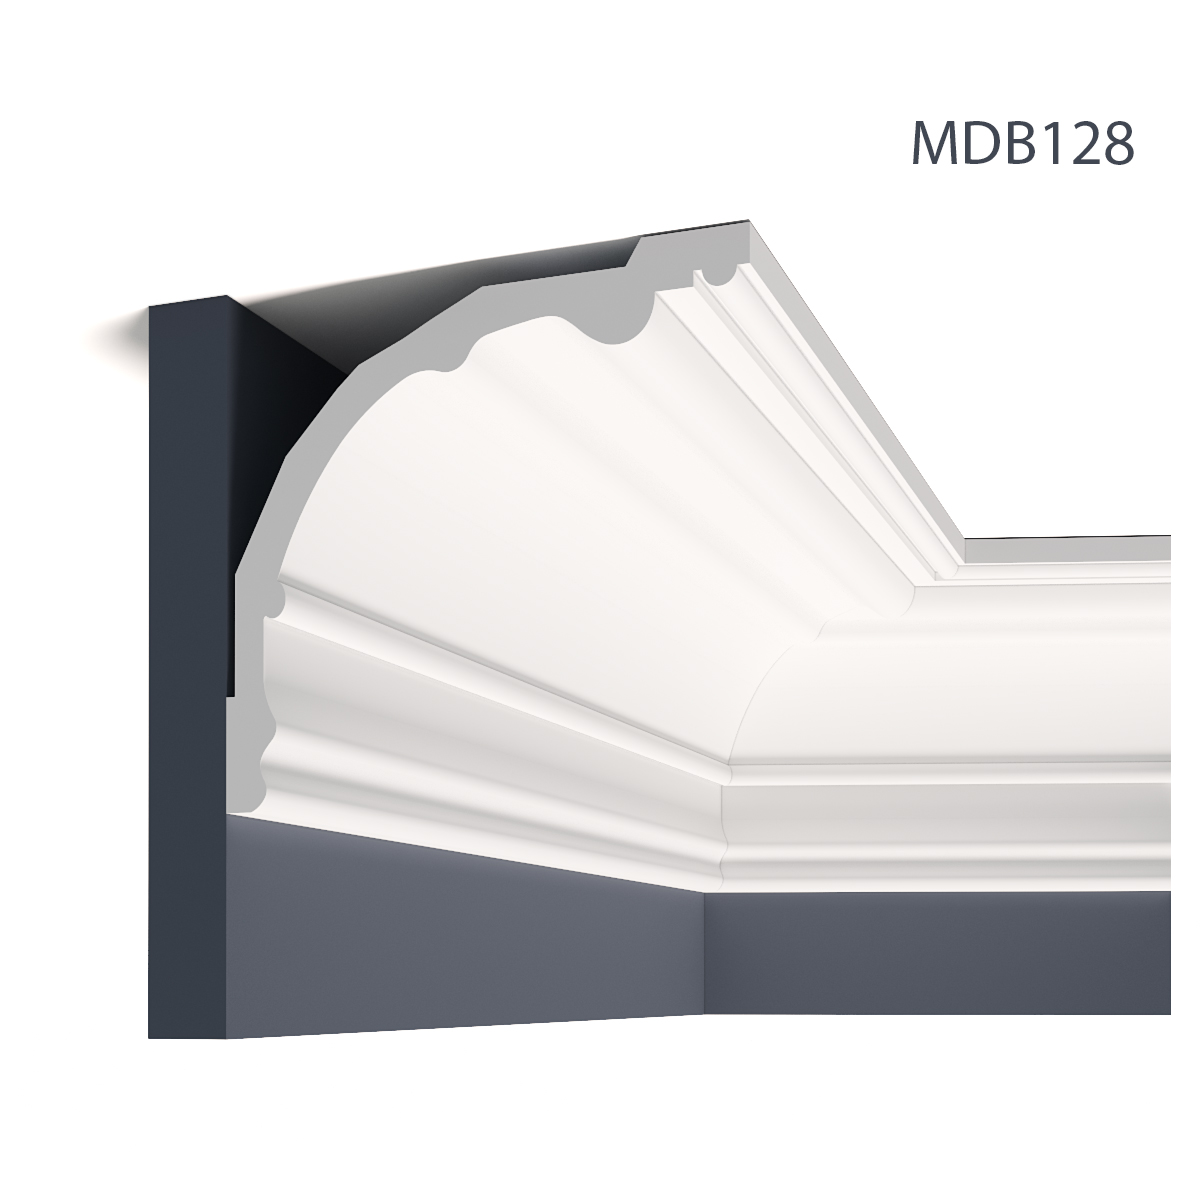 Cornișe tavan Mardom Decor MRD-MDB128, material: ProFoam